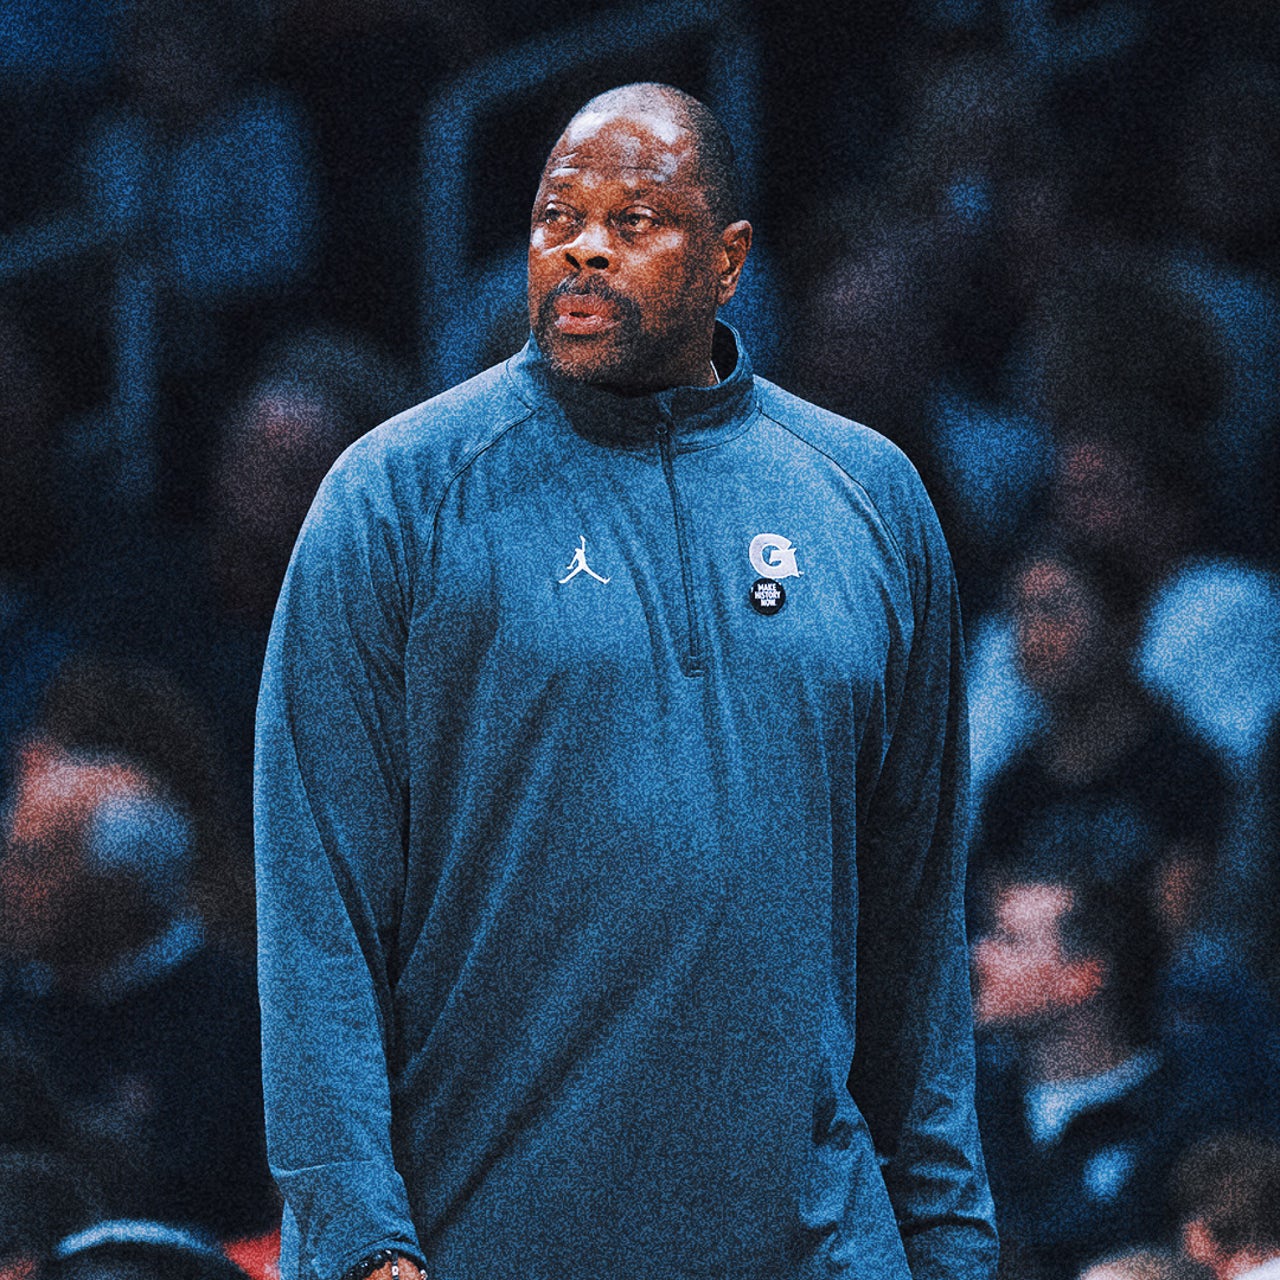 Patrick Ewing hired as Georgetown head basketball coach 